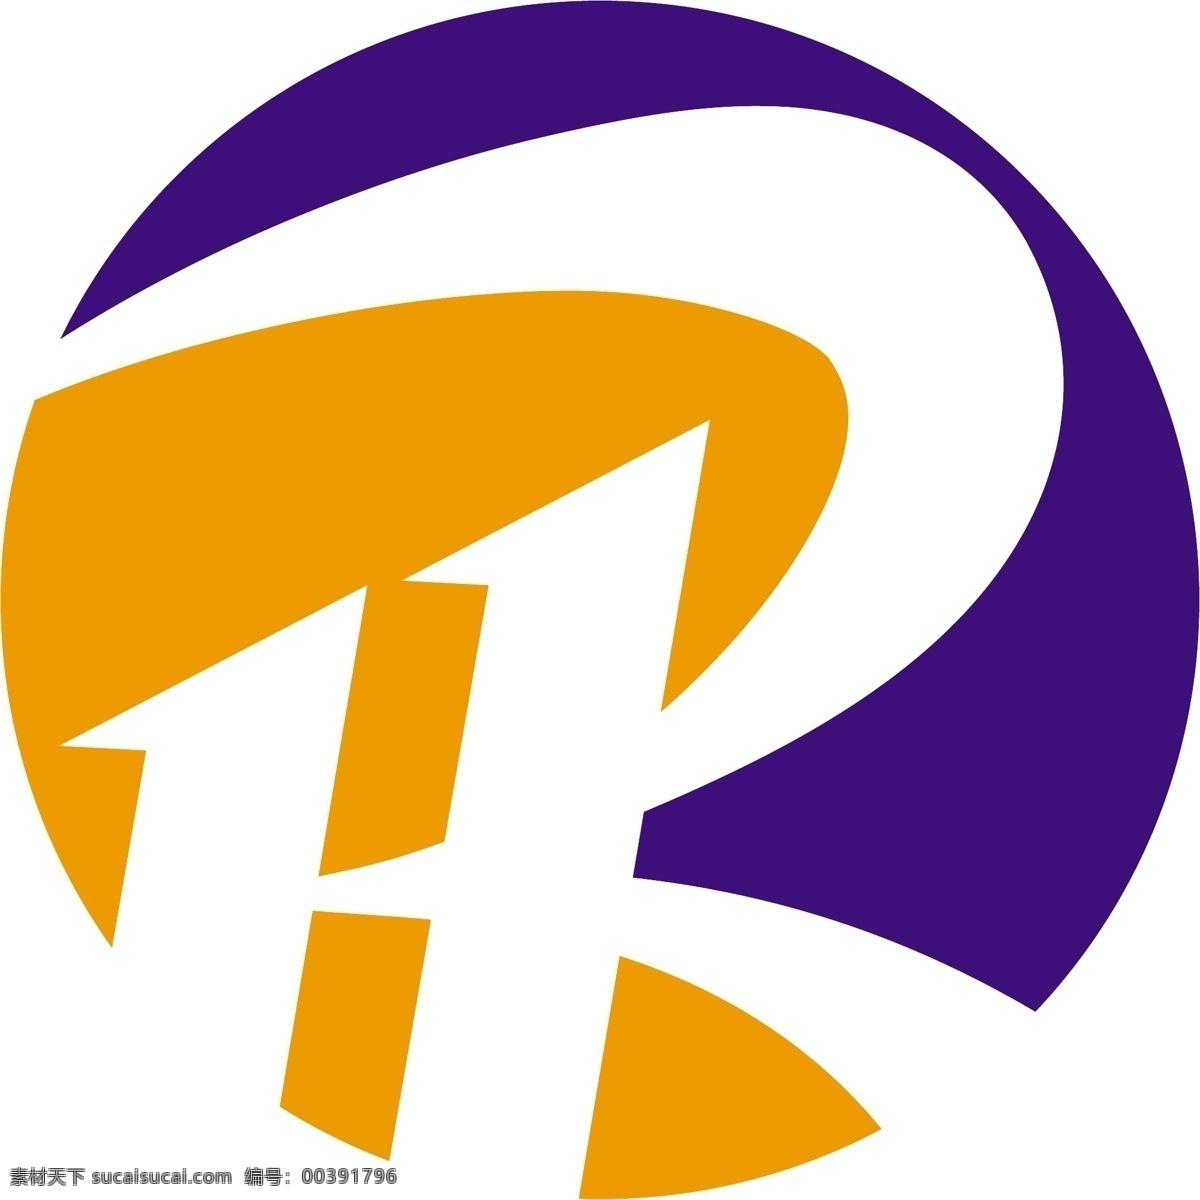 rh 开头 logo 科技 工厂 现代 矢量 图标 标志 简约 标志图标 企业